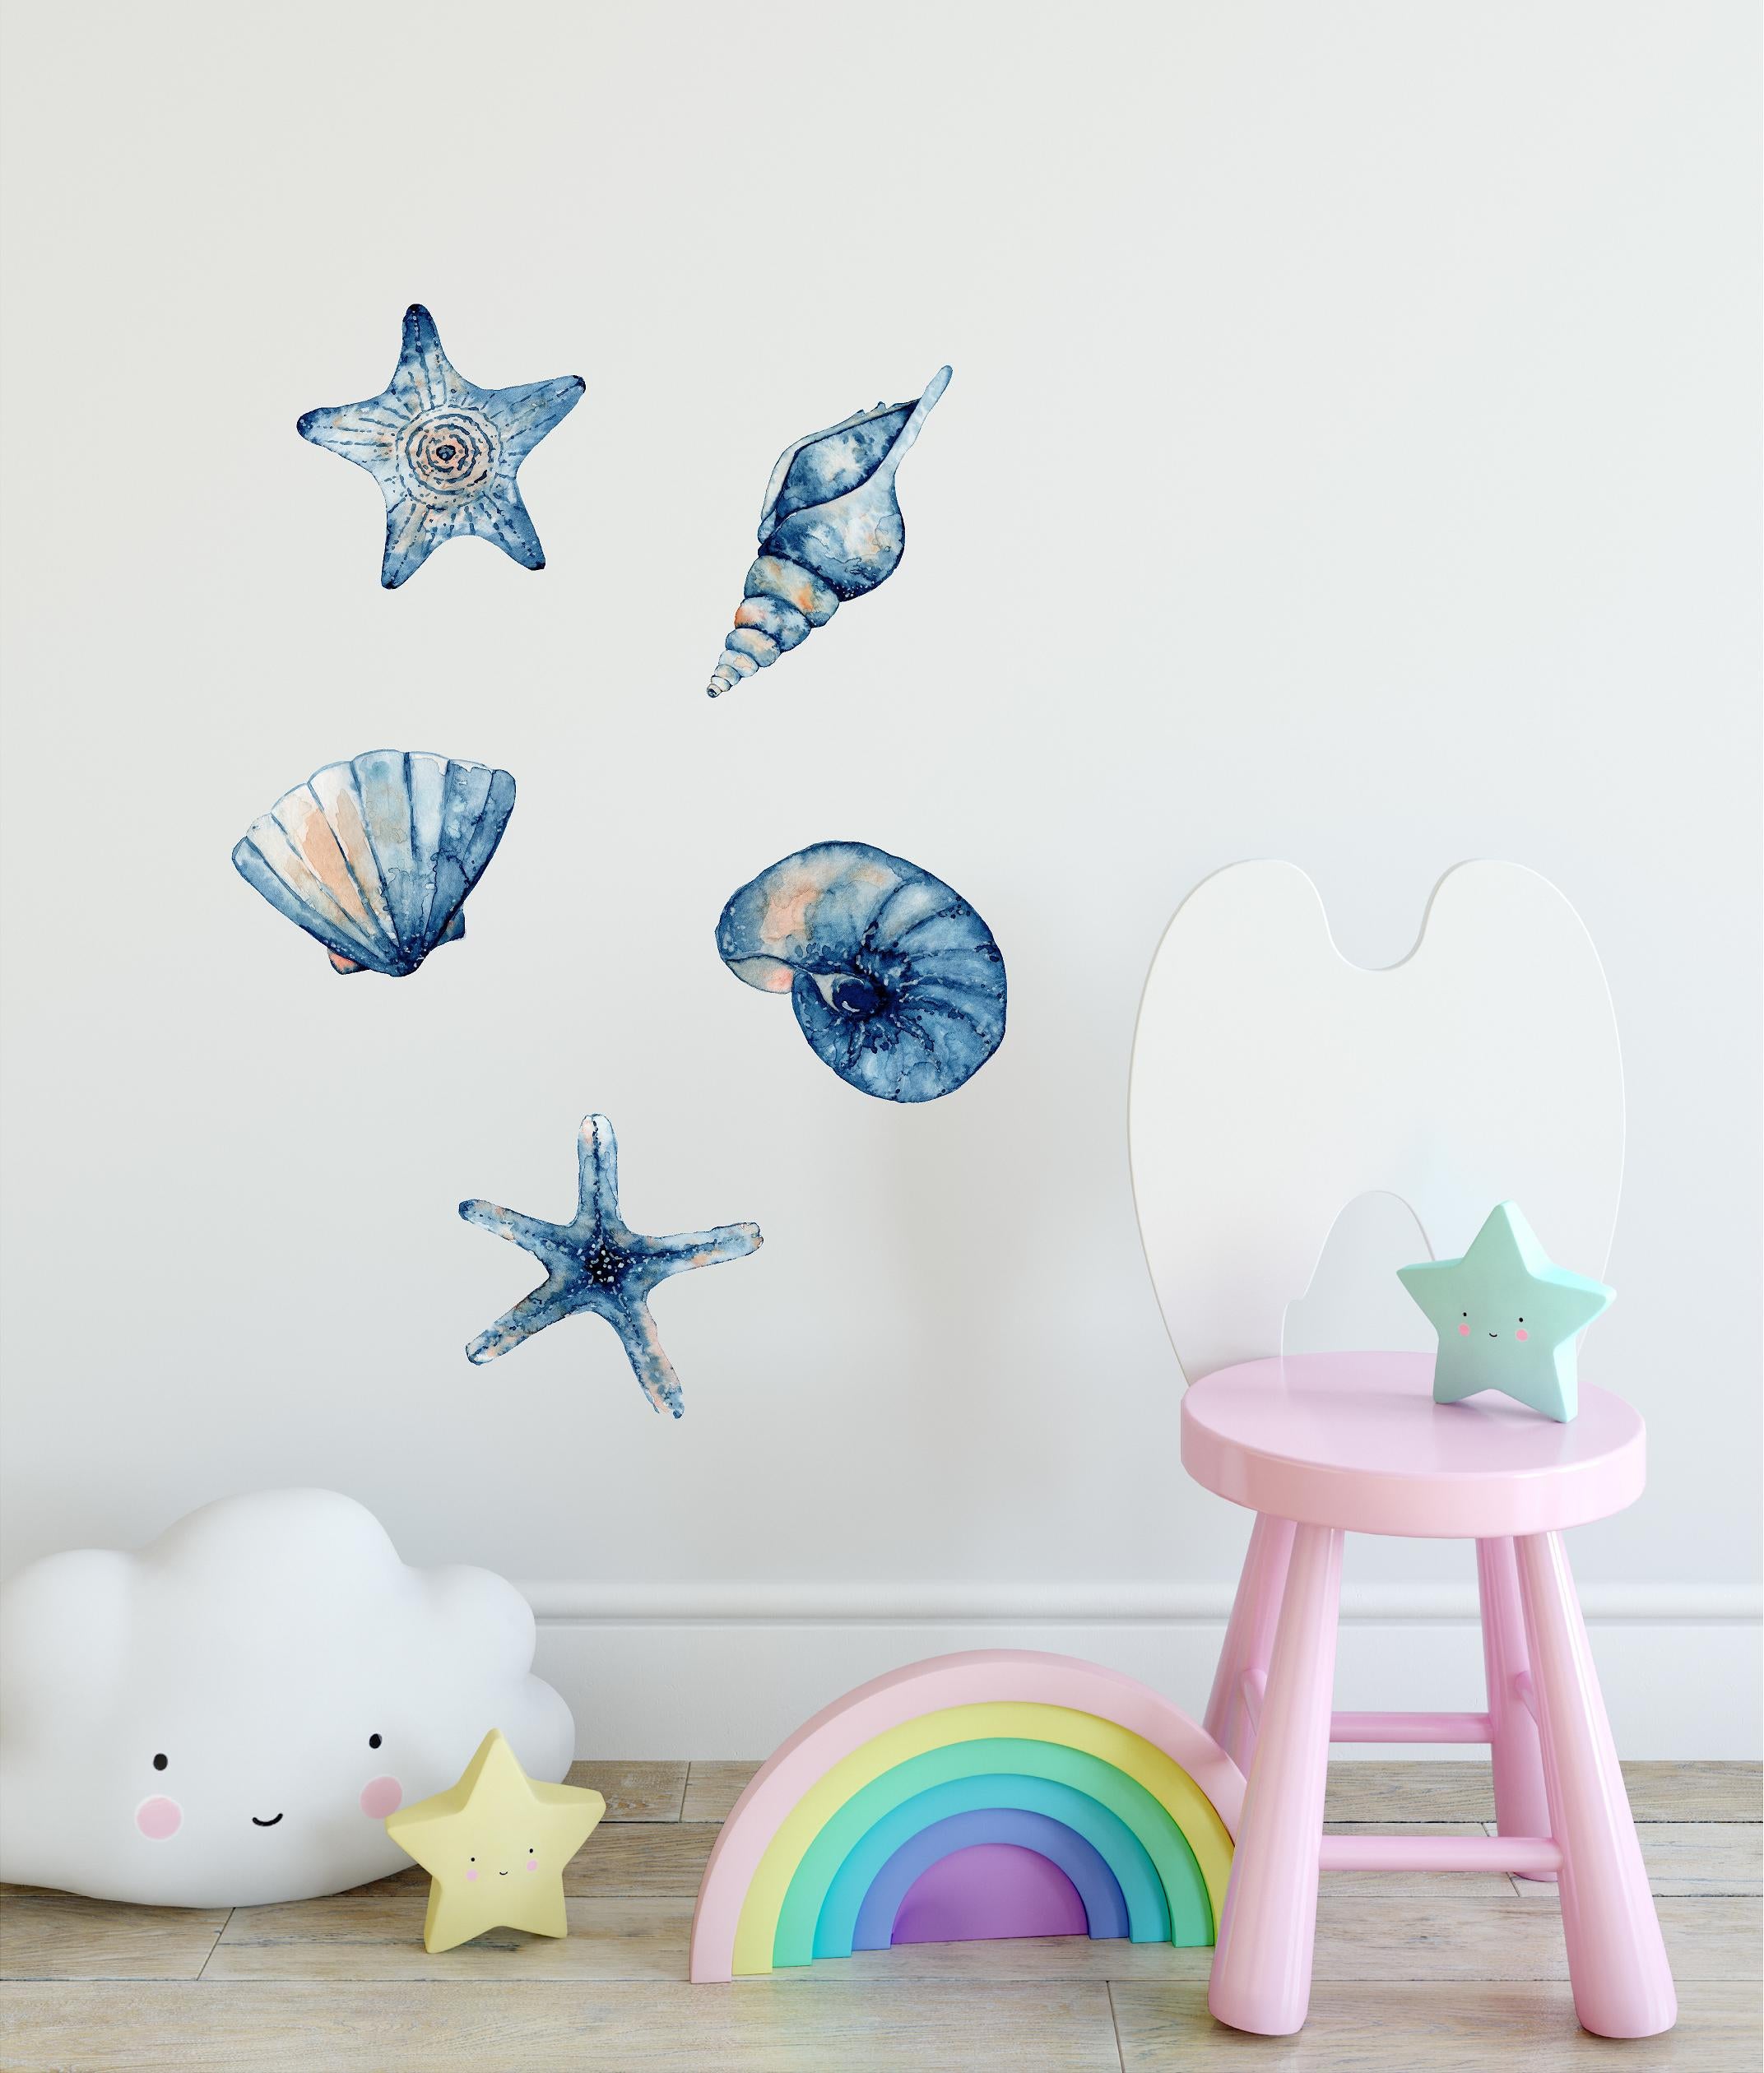 Watercolor Navy Blue Seashells & Starfish Wall Decal Set Ocean Sea Life Wall Art Sticker | DecalBaby